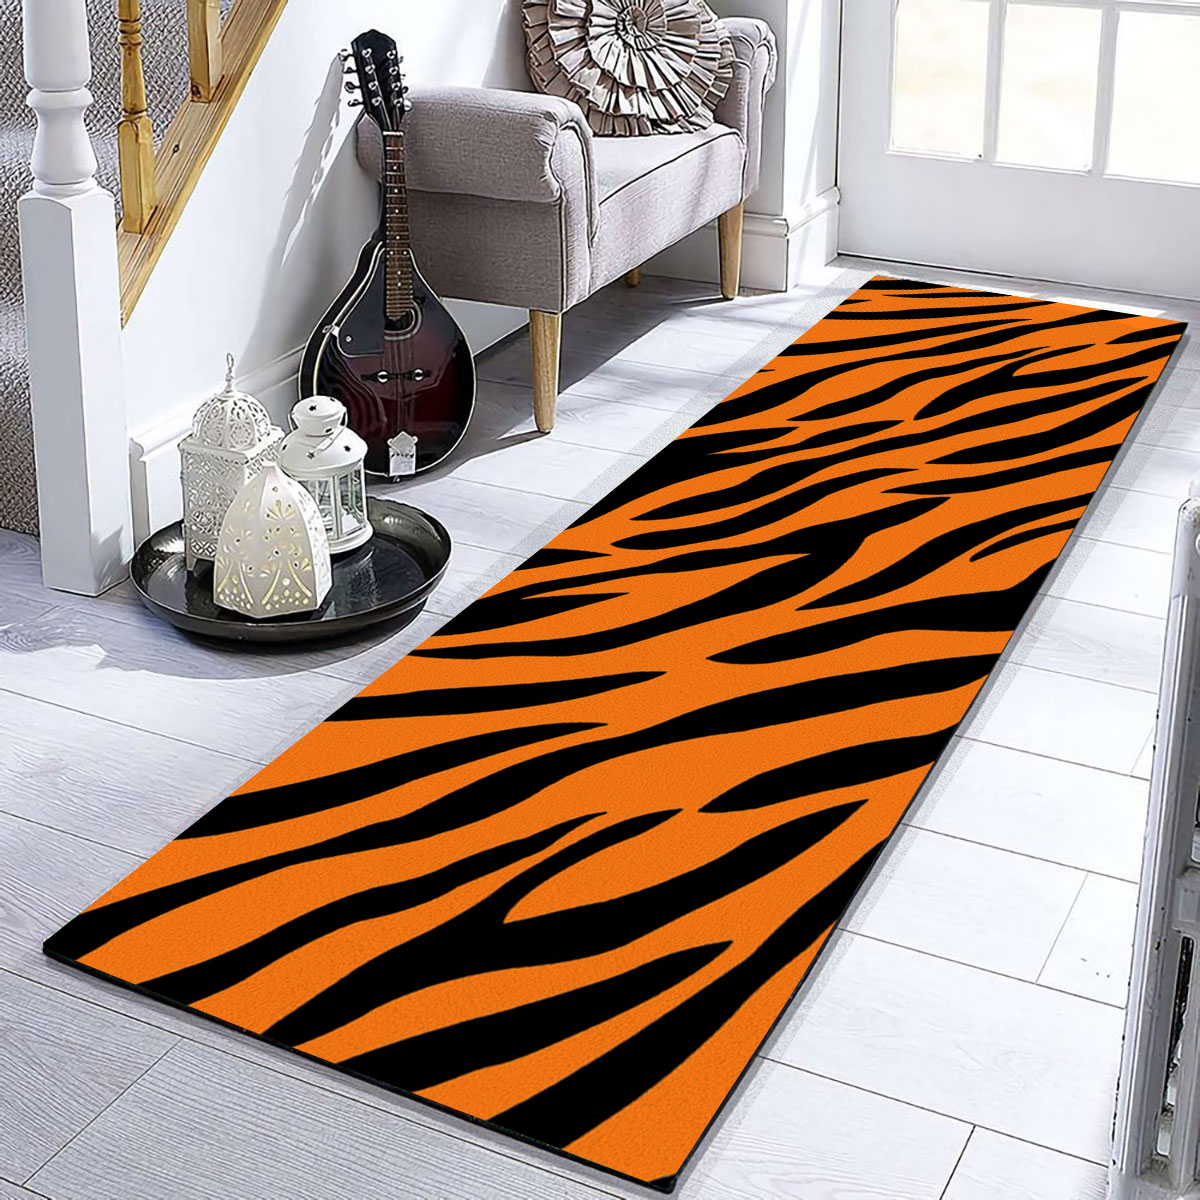 Tiger Skin Runner Carpet 6